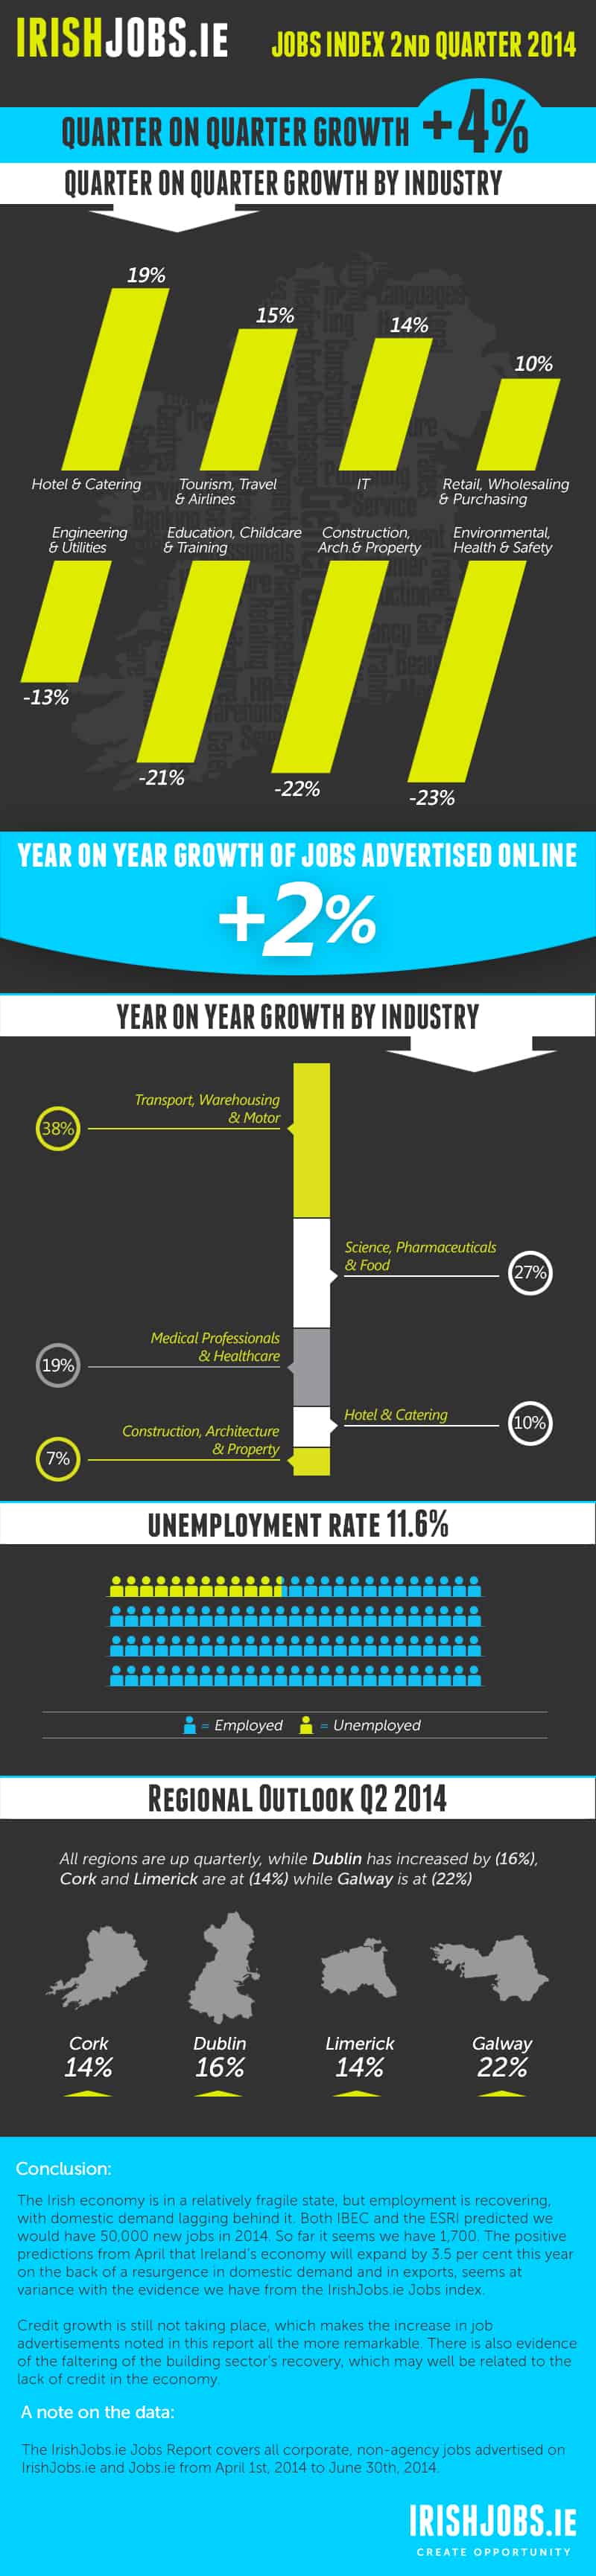 Jobs Index Q2 2014 infographic